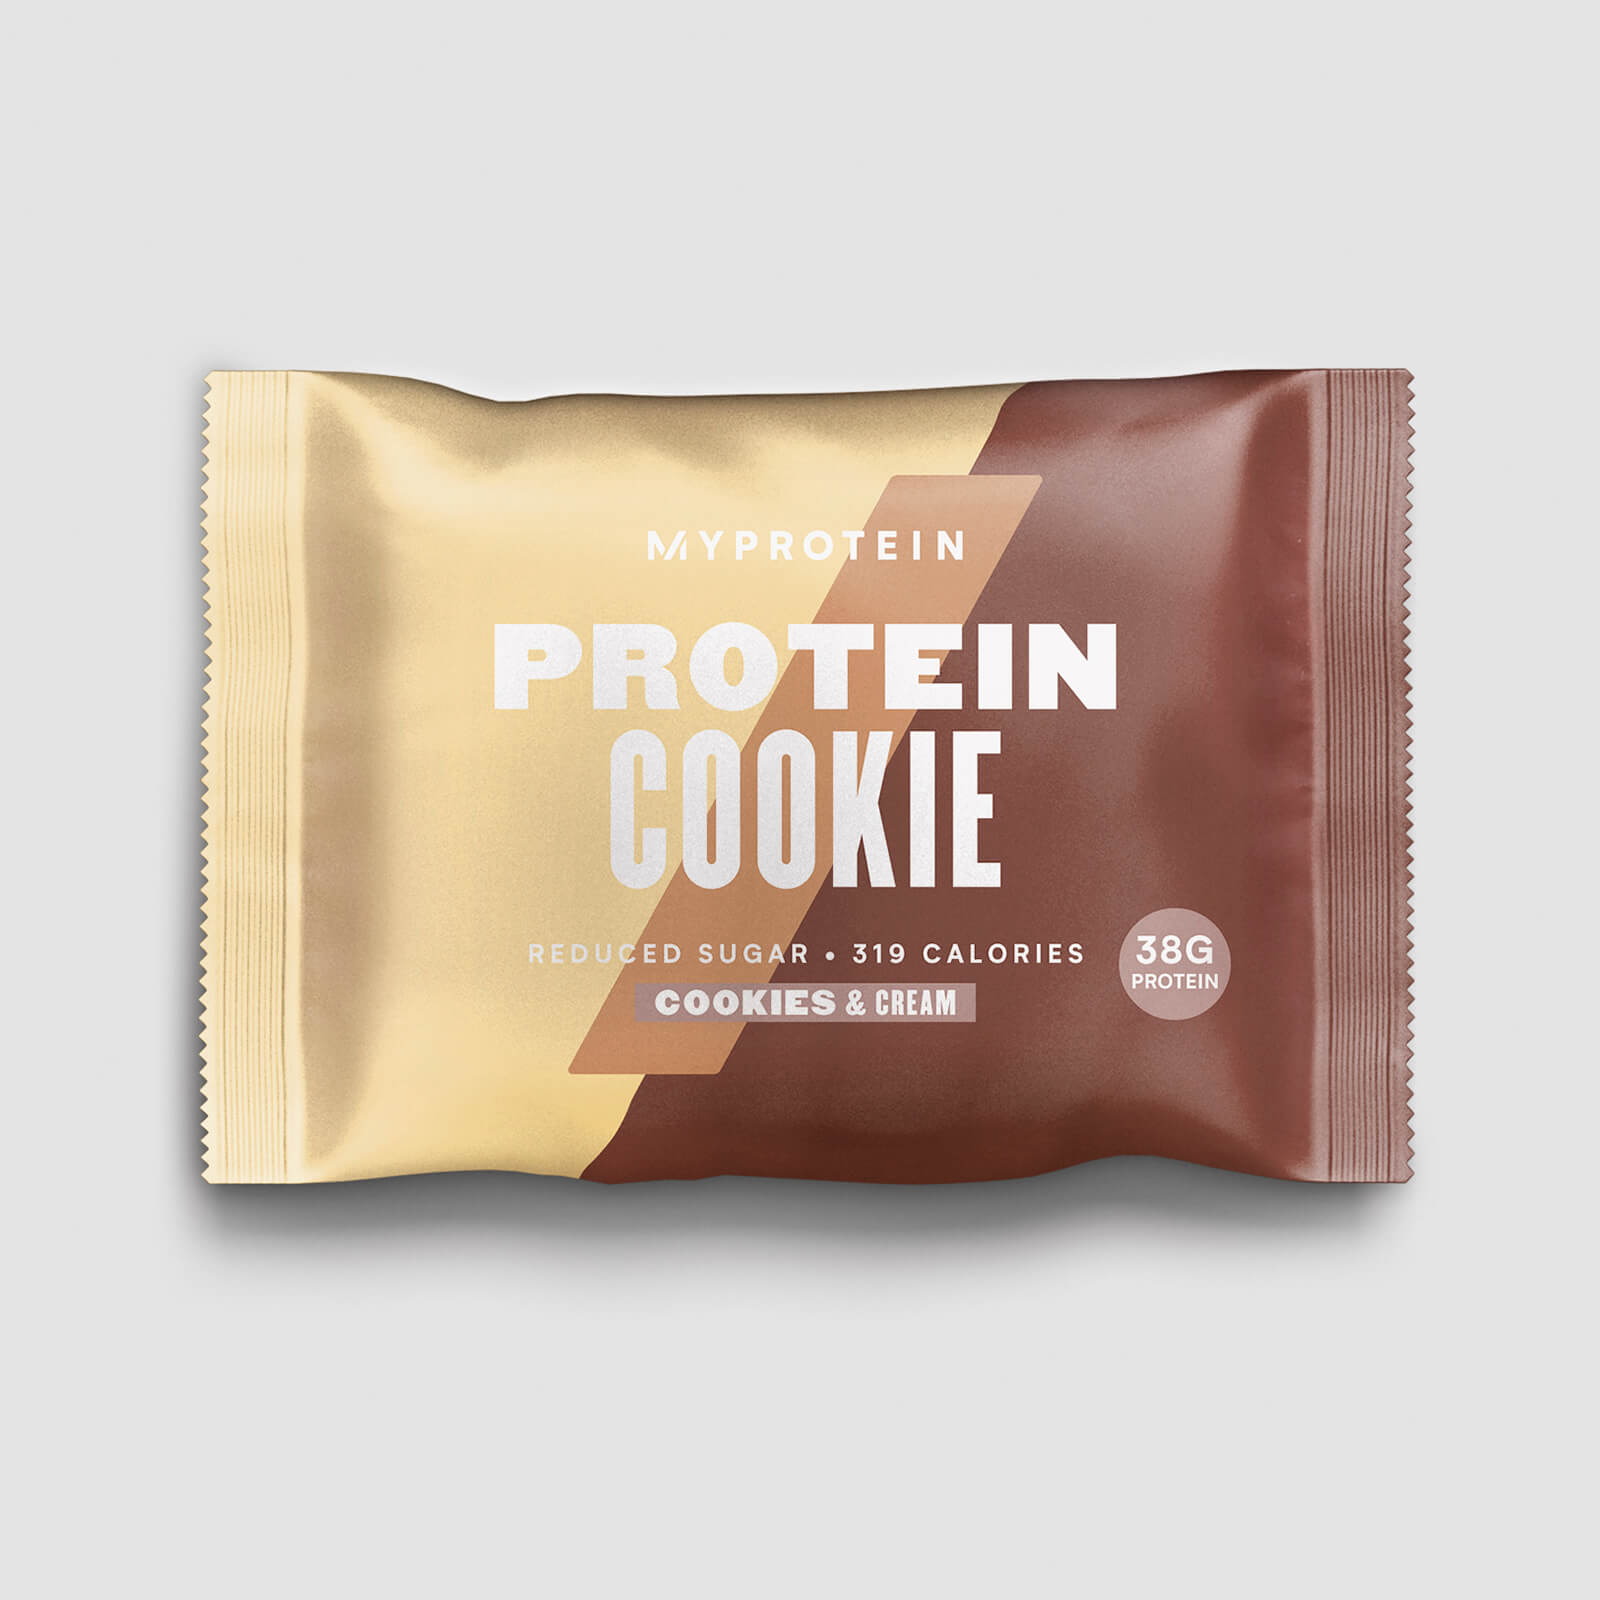 Myprotein Protein Cookie (smagsprøve) - Chokolade appelsin